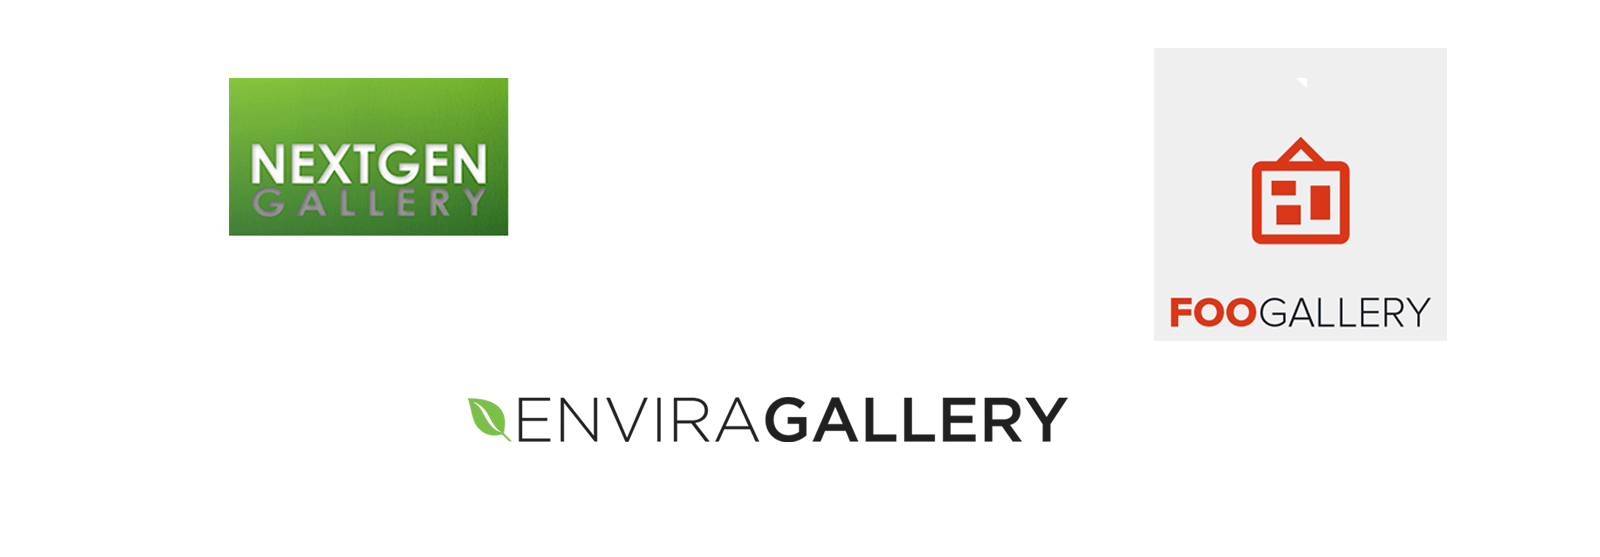 Envira Gallery, NextGEN Gallery or FooGallery - WordPress Gallery Plugins Compared